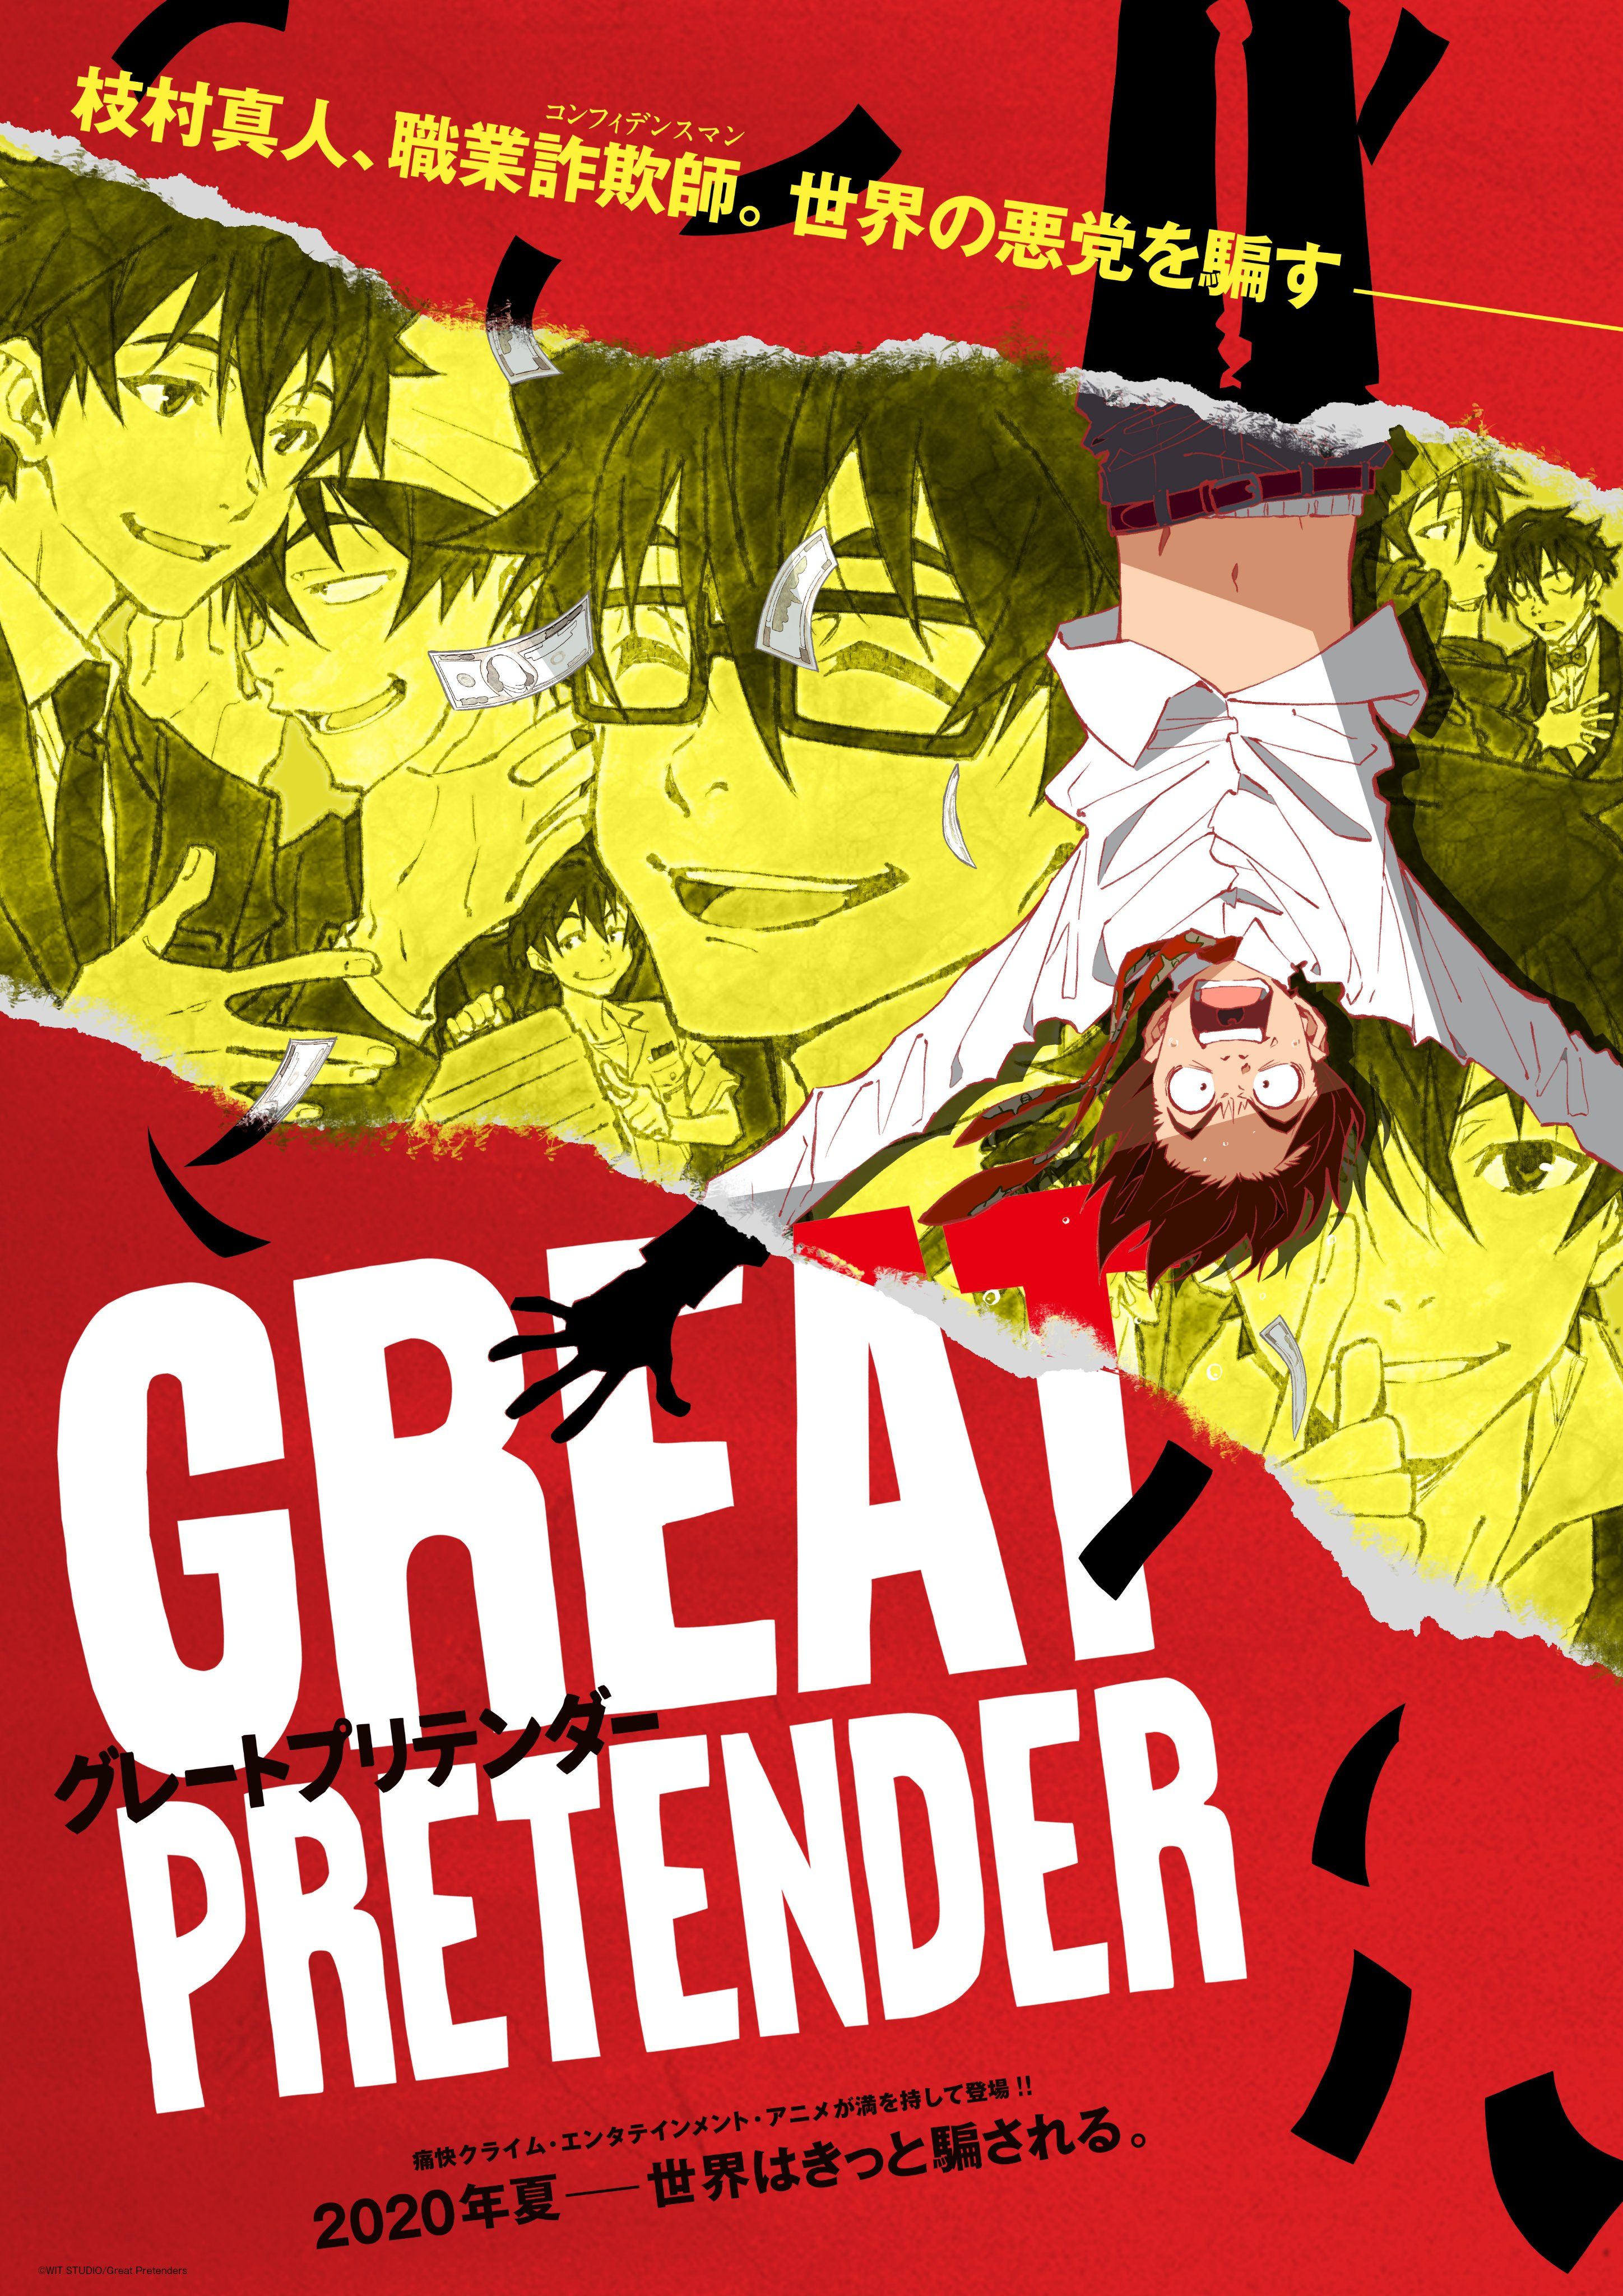 Great Pretender Anime Image Board